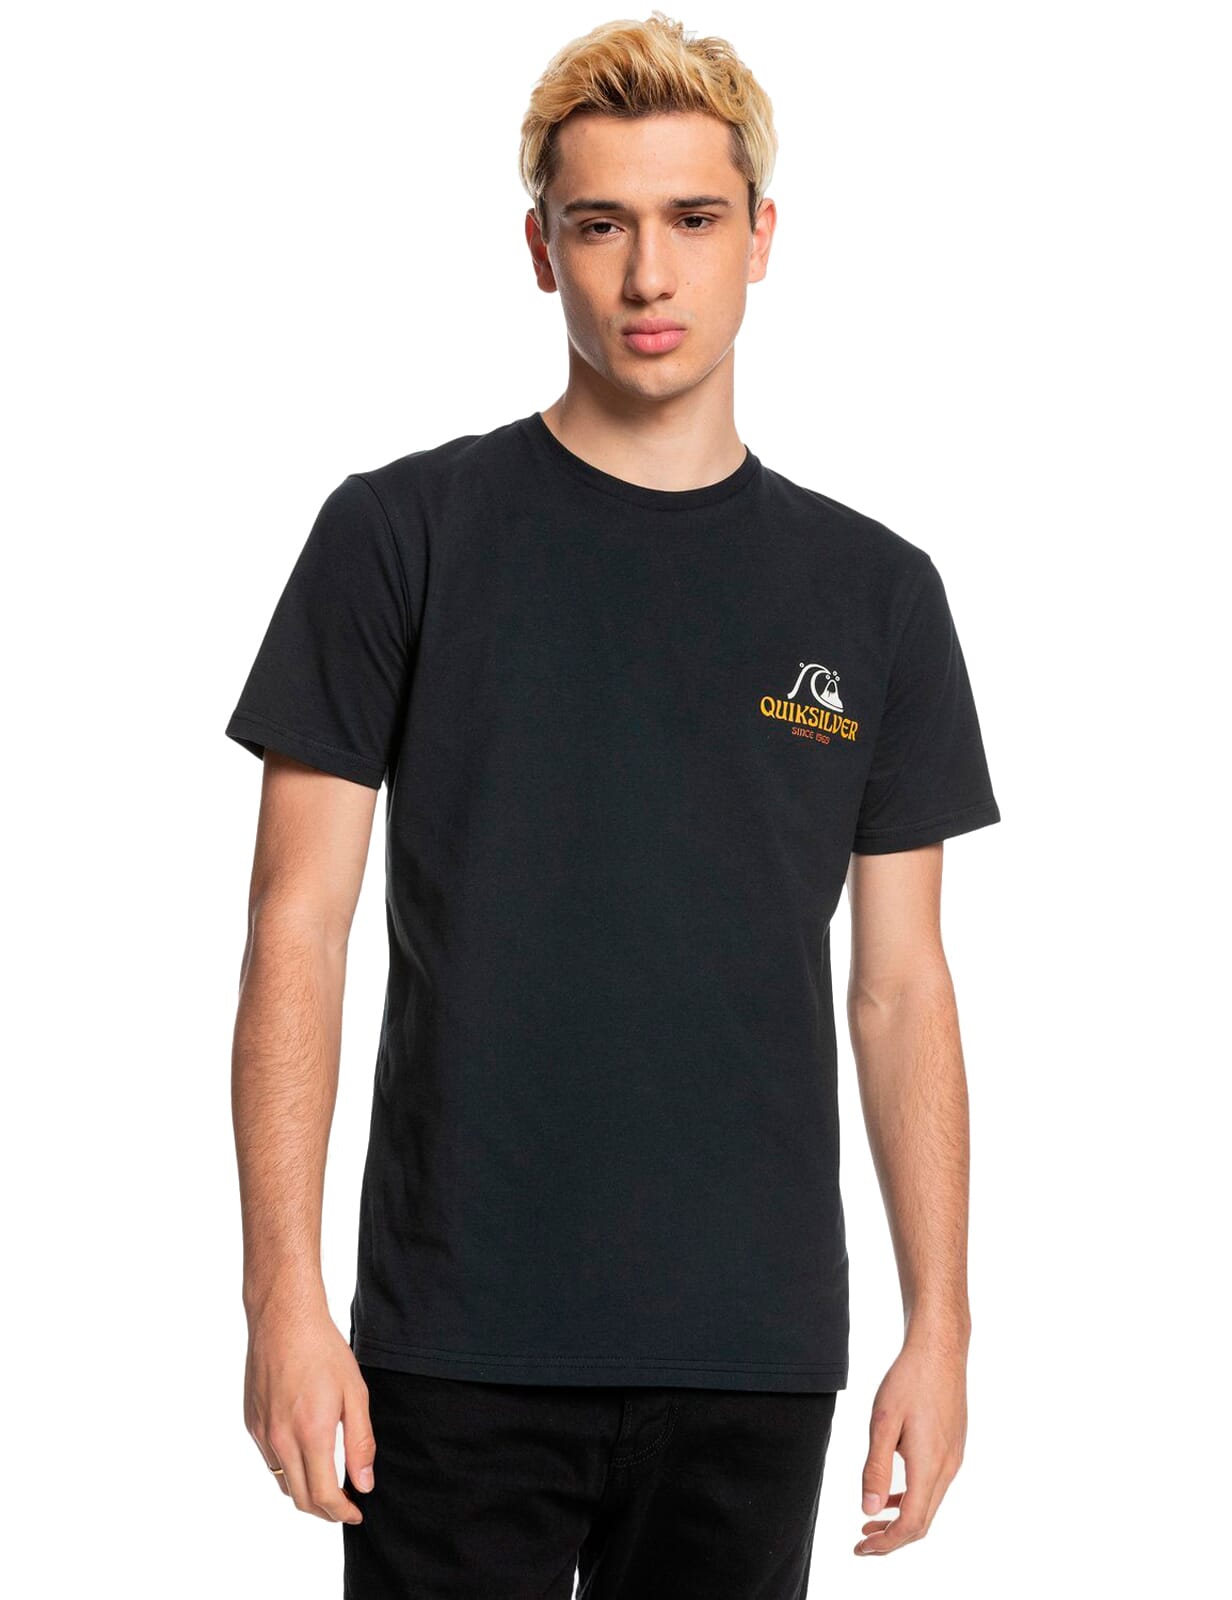 Quiksilver Phantasy Land Short Sleeve T-Shirt in Black 